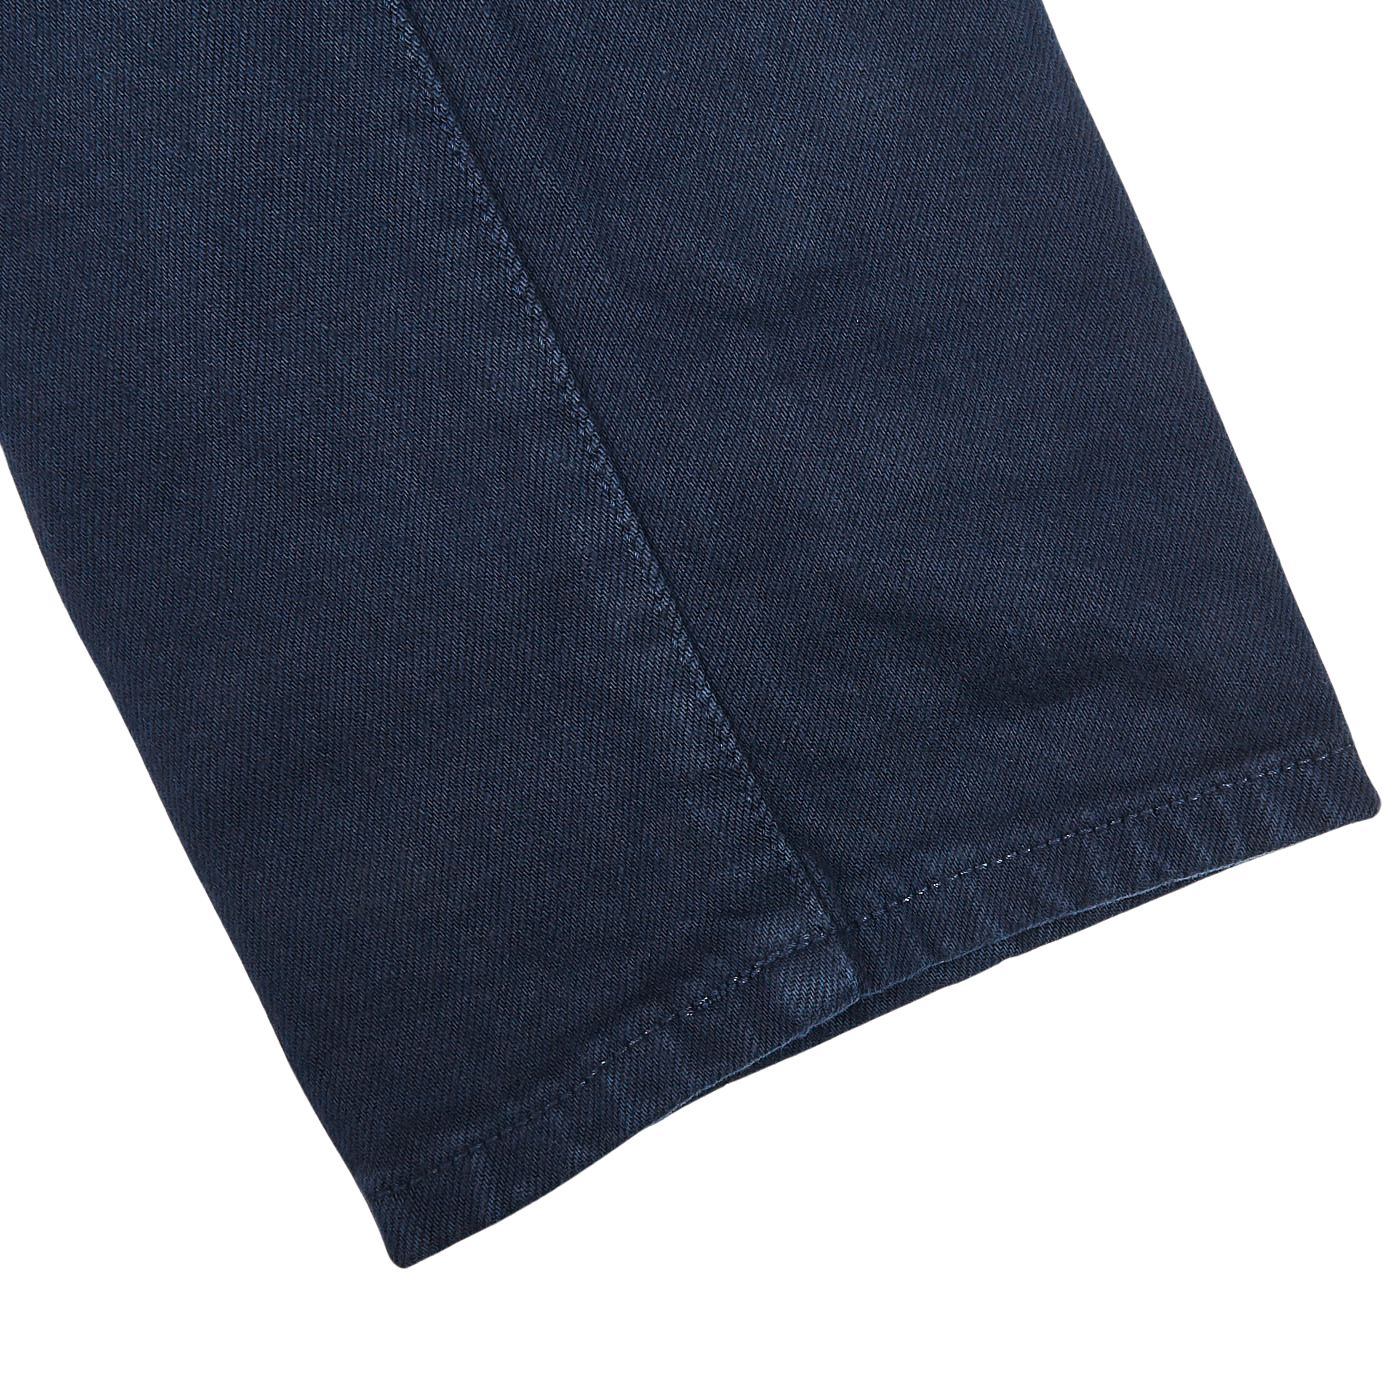 C.O.F Studio Navy Blue Candiani Cotton M7 Jeans Cuff